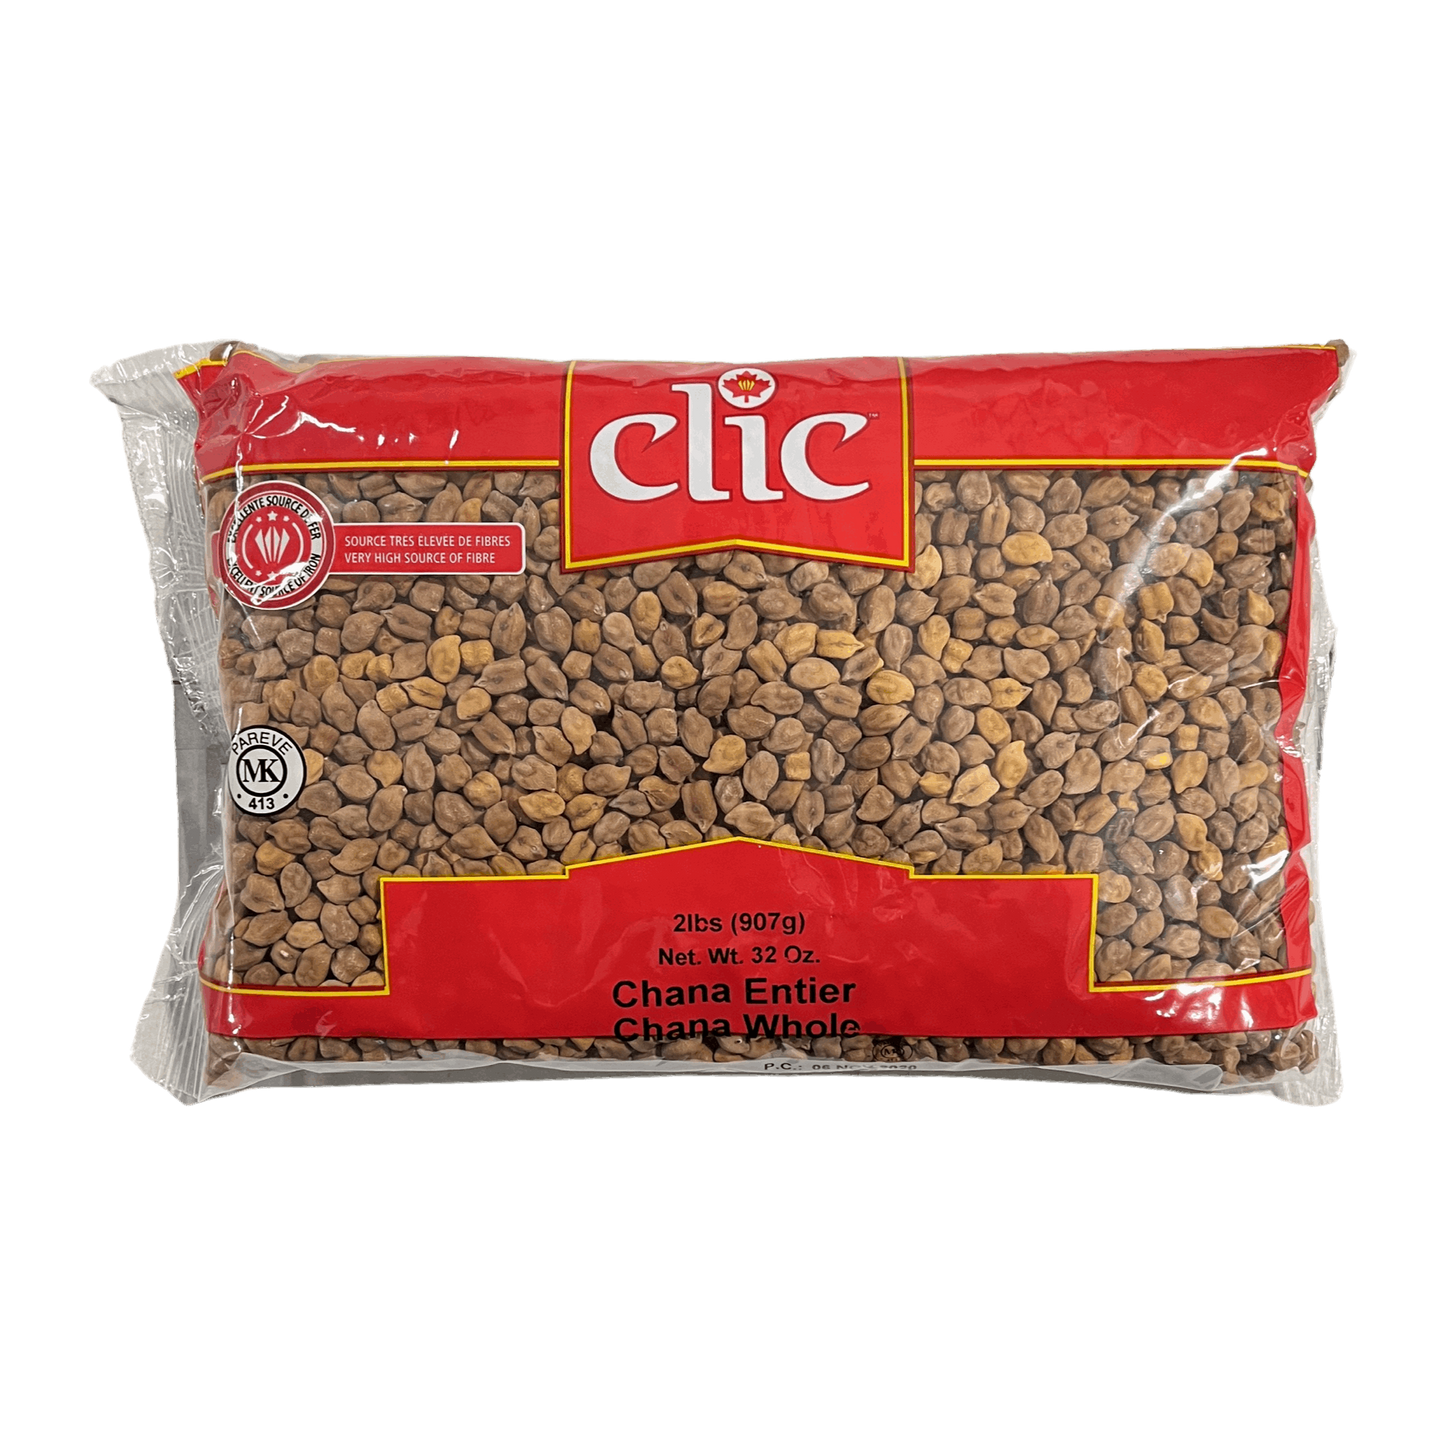 Clic Whole Chana Beans 907g Damaski